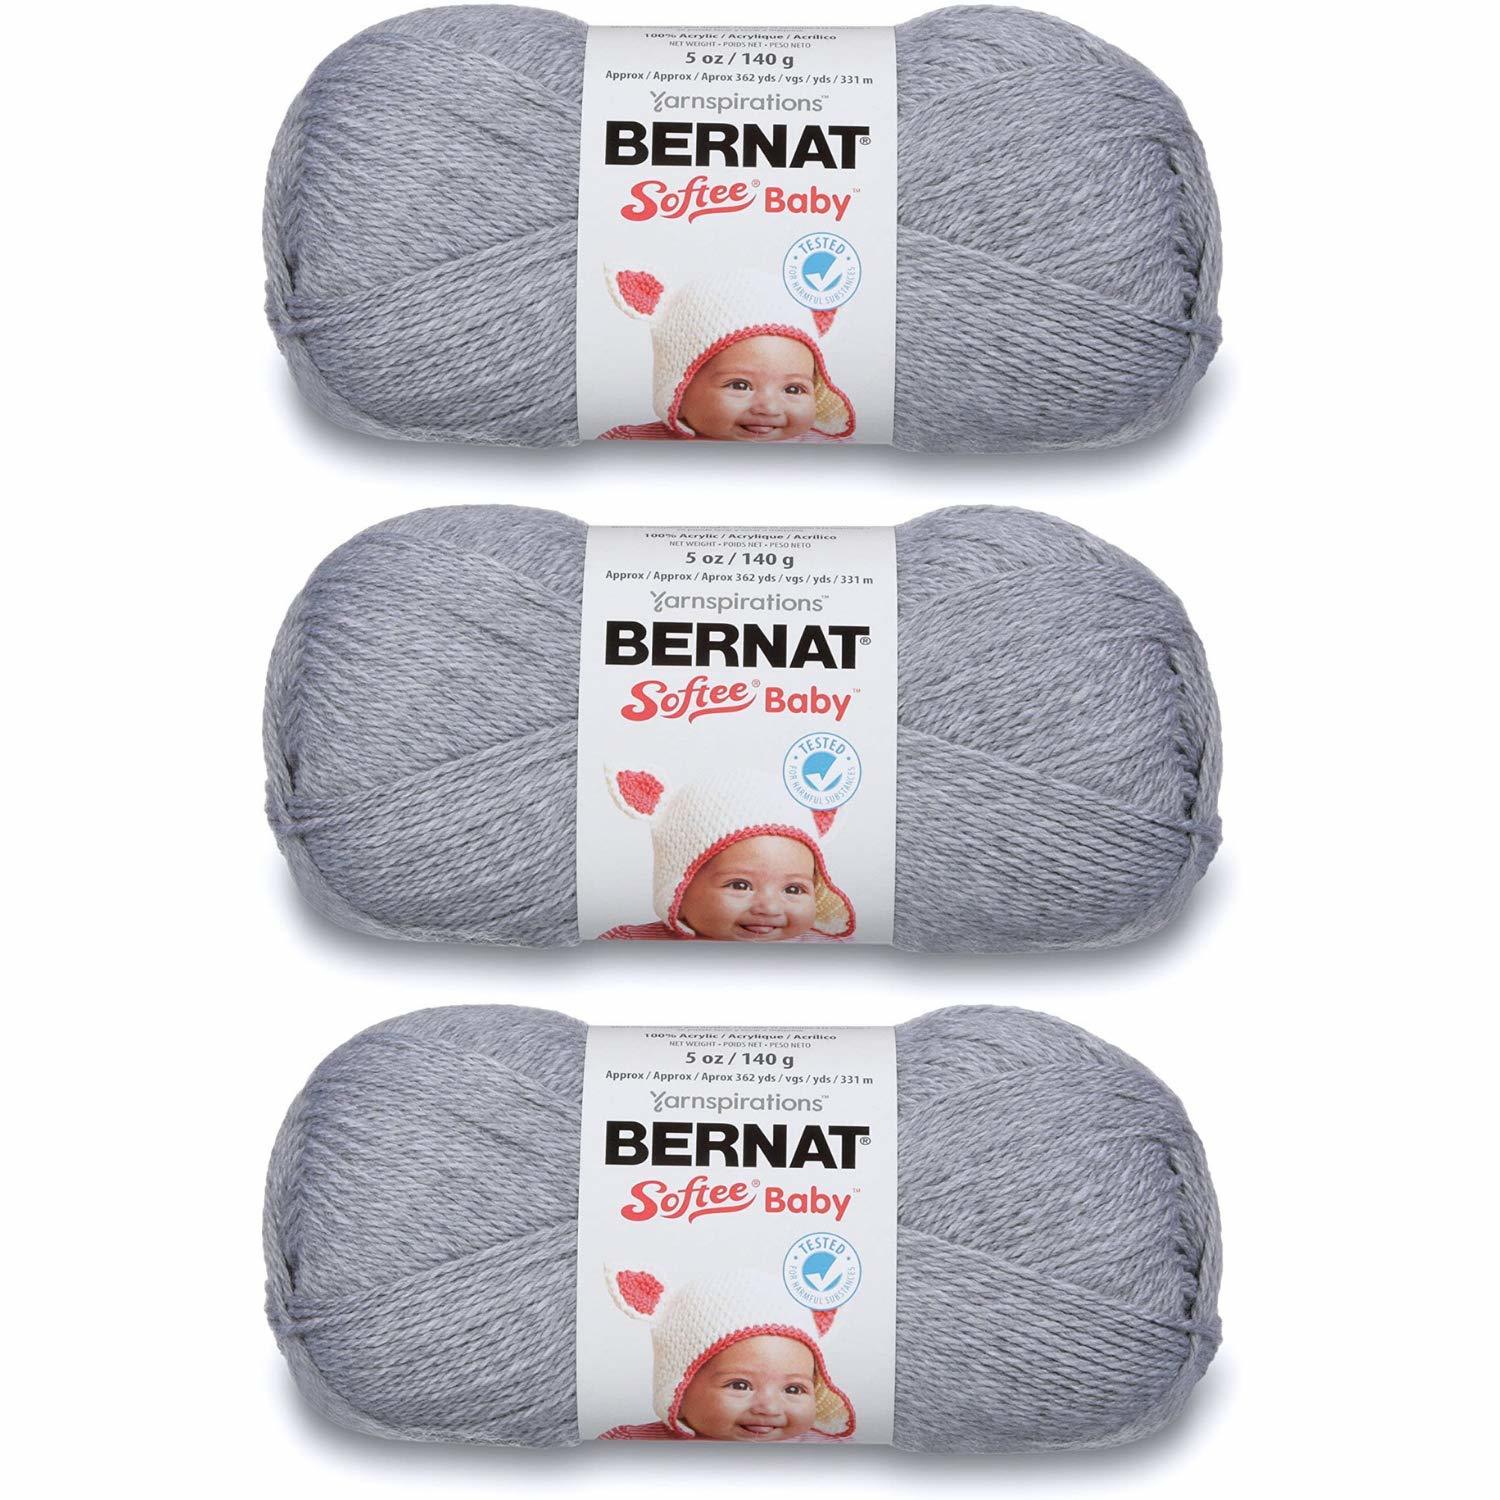 Bernat Softee Baby Solids, Knitting Yarn & Wool